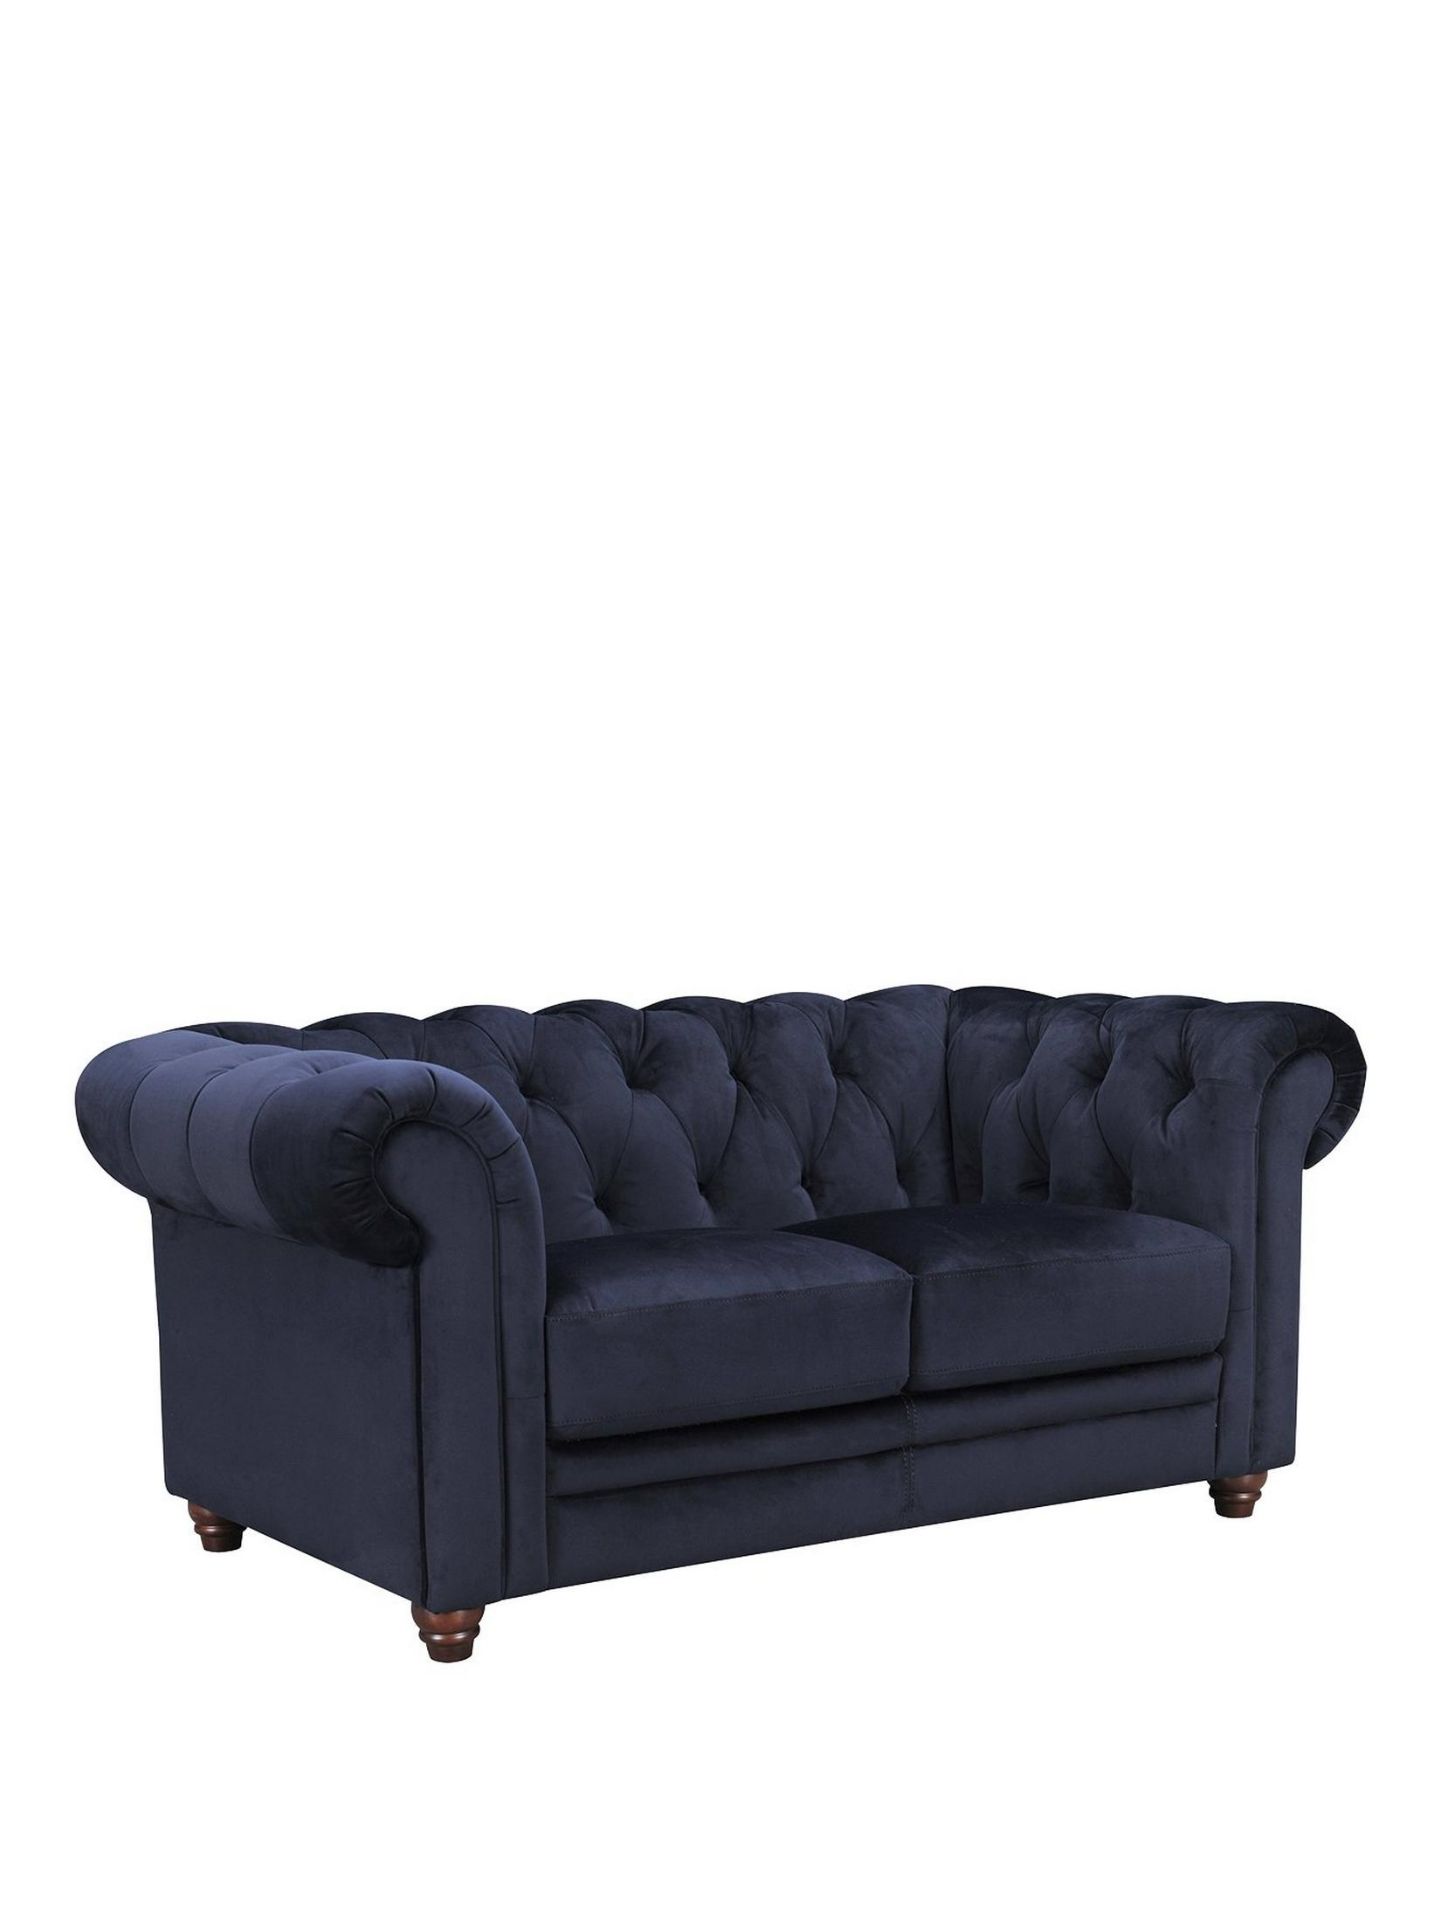 Cheltenham 2 Seater Sofa. RPP £1,519.00. H 74 x W 164 x D 97cm Iconic silhouette Reflecting - Image 2 of 2